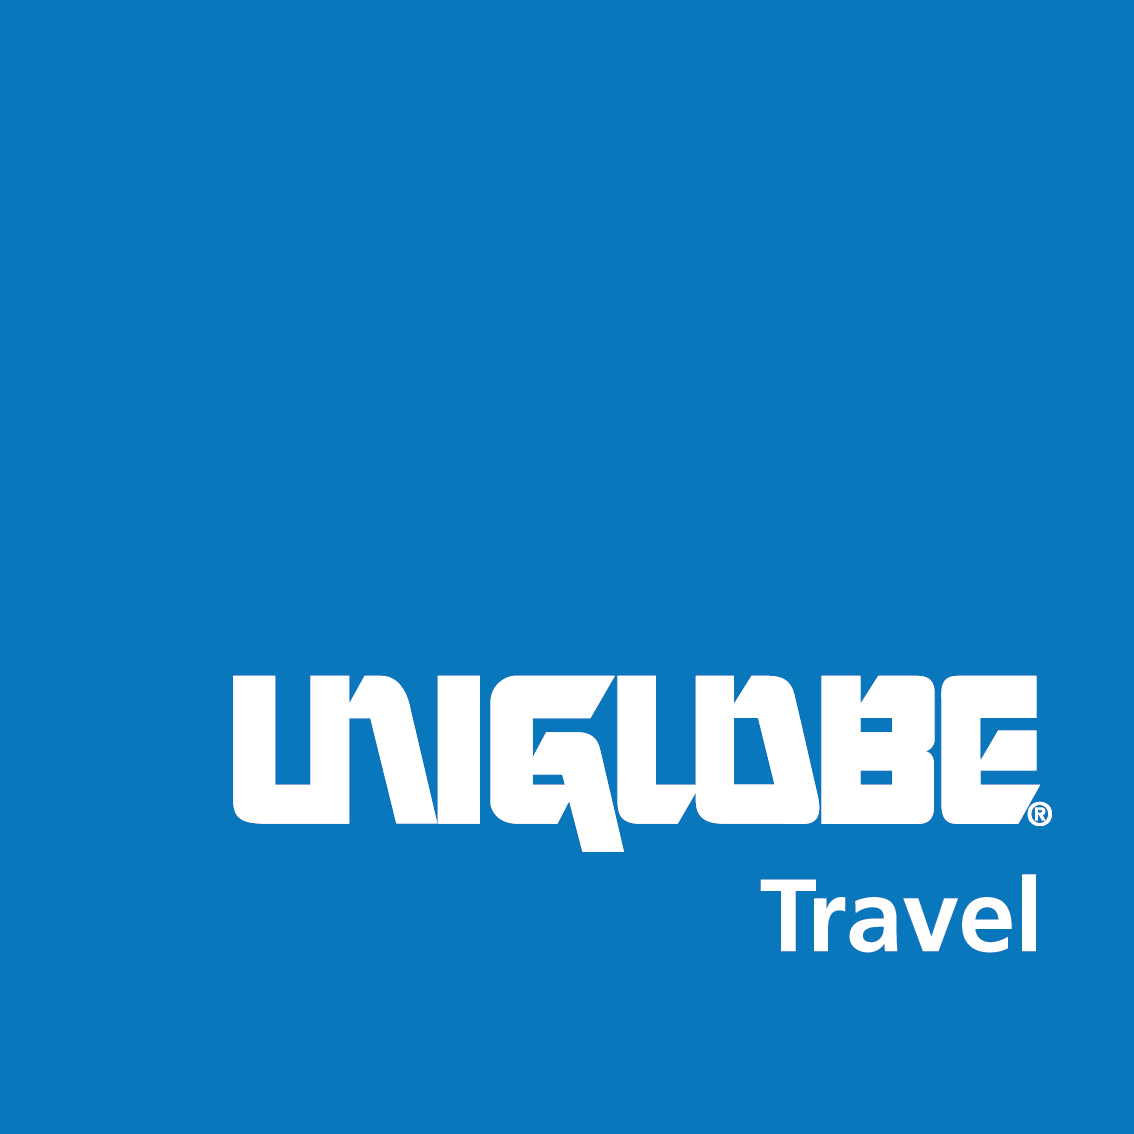 Uniglobe Worldwide Travel